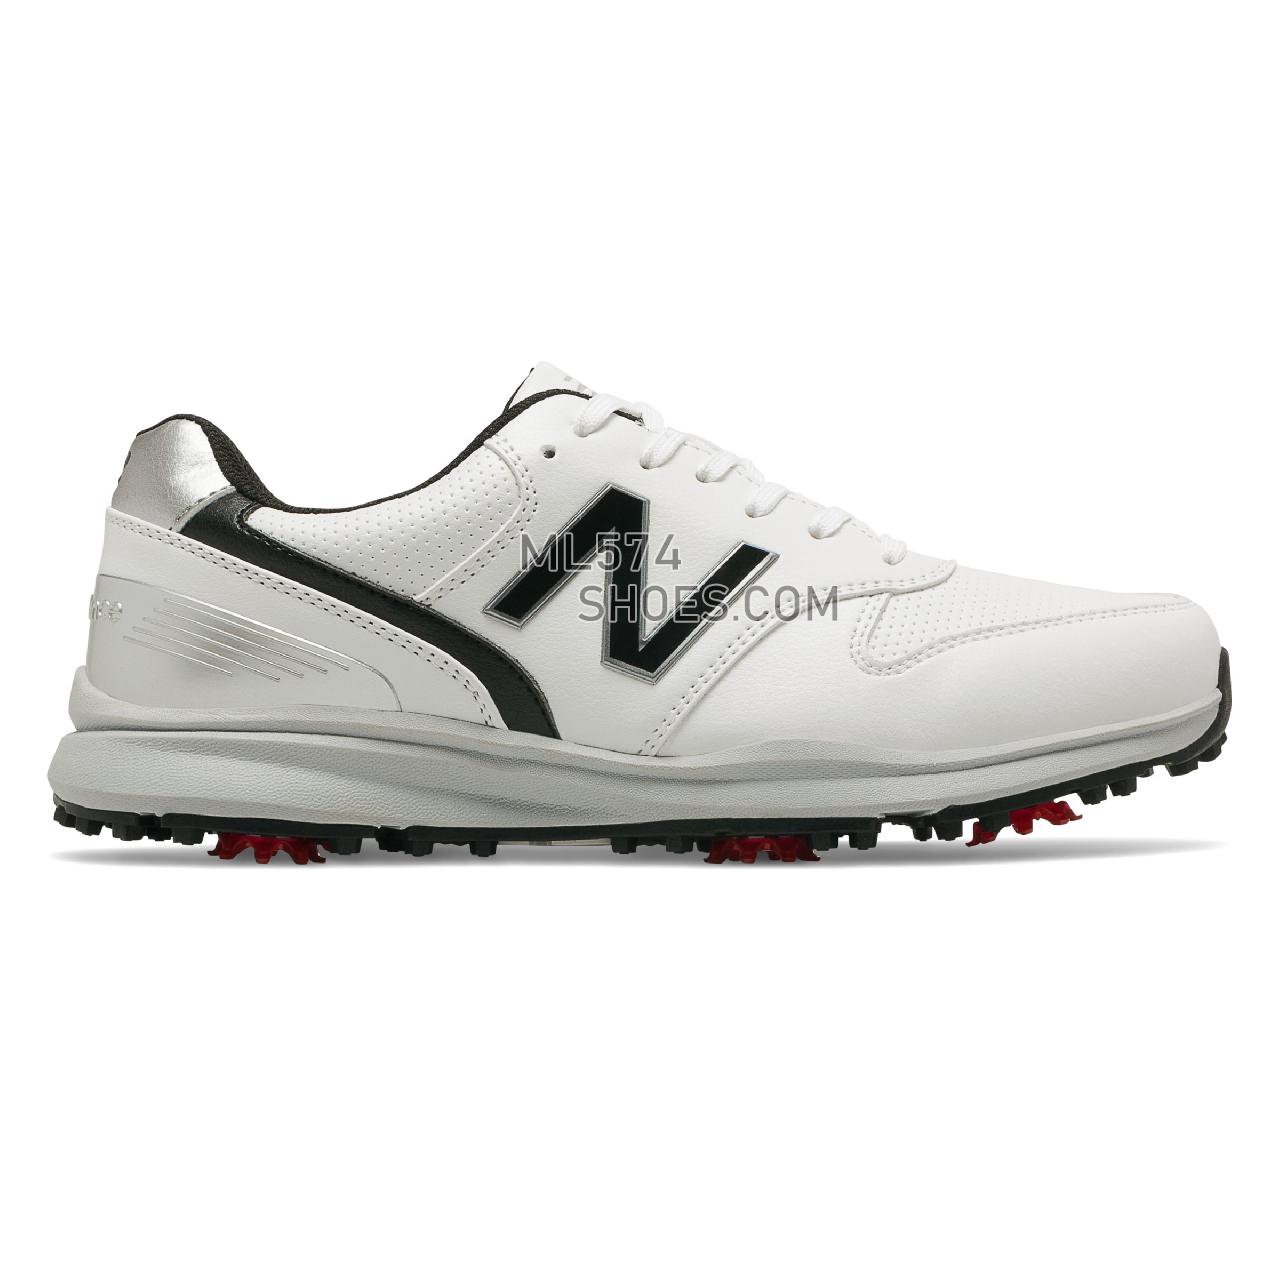 New Balance Sweeper - Men's Golf - White with Black - NBG1800WK